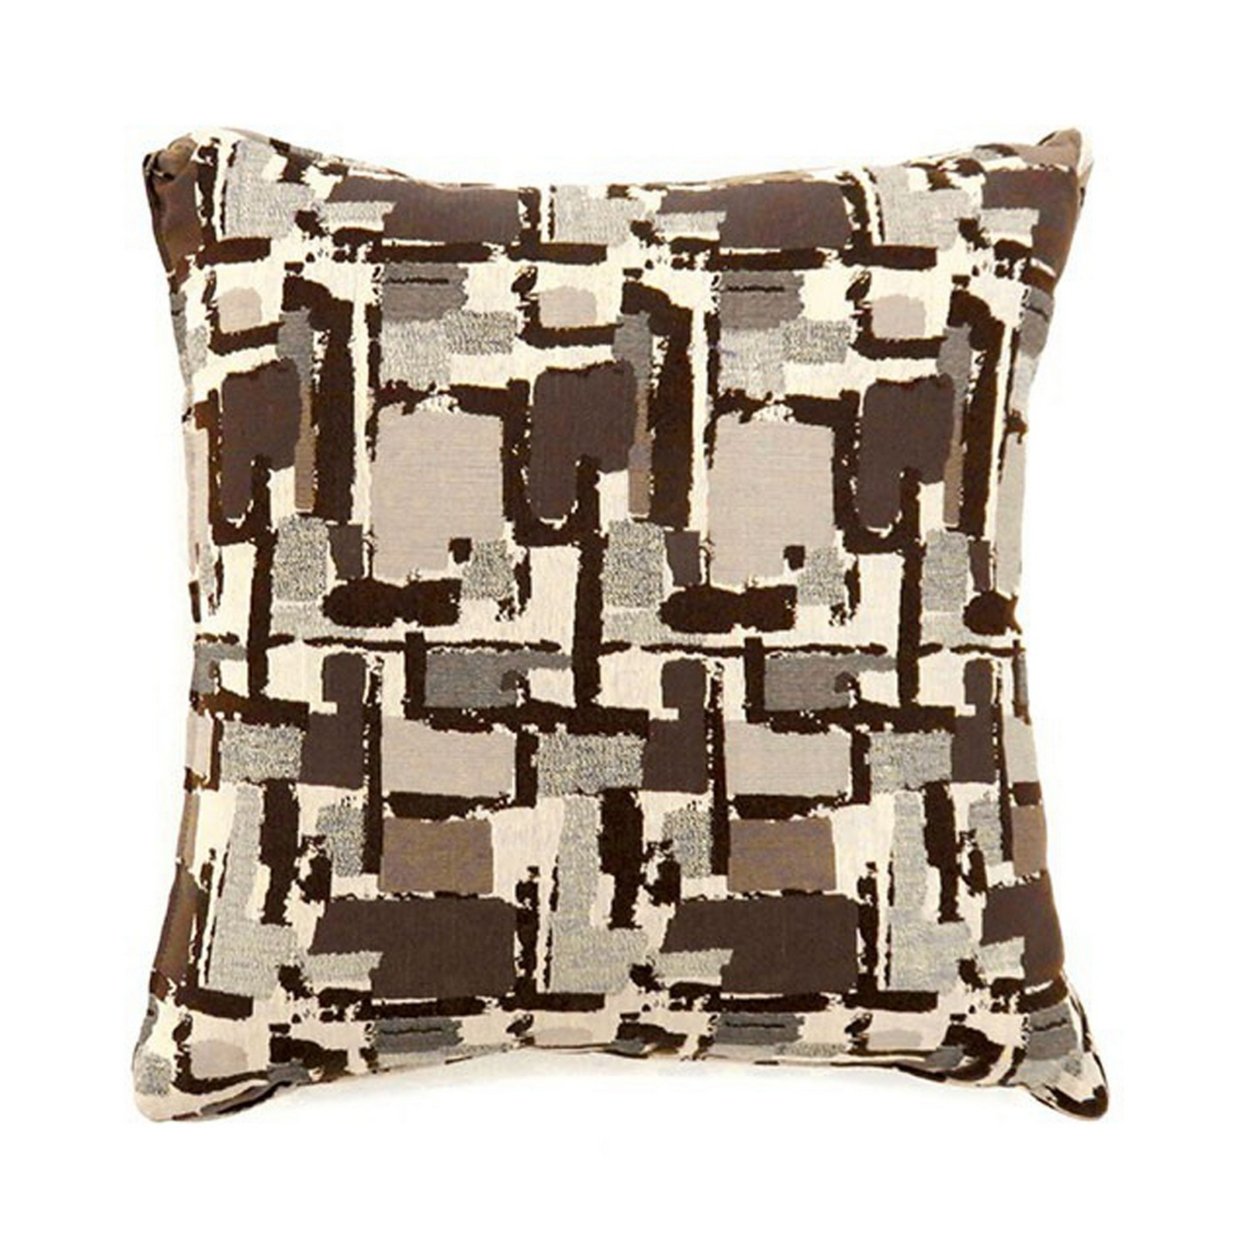 Concrit Contemporary Pillow, Small Set Of 2, Brown- Saltoro Sherpi